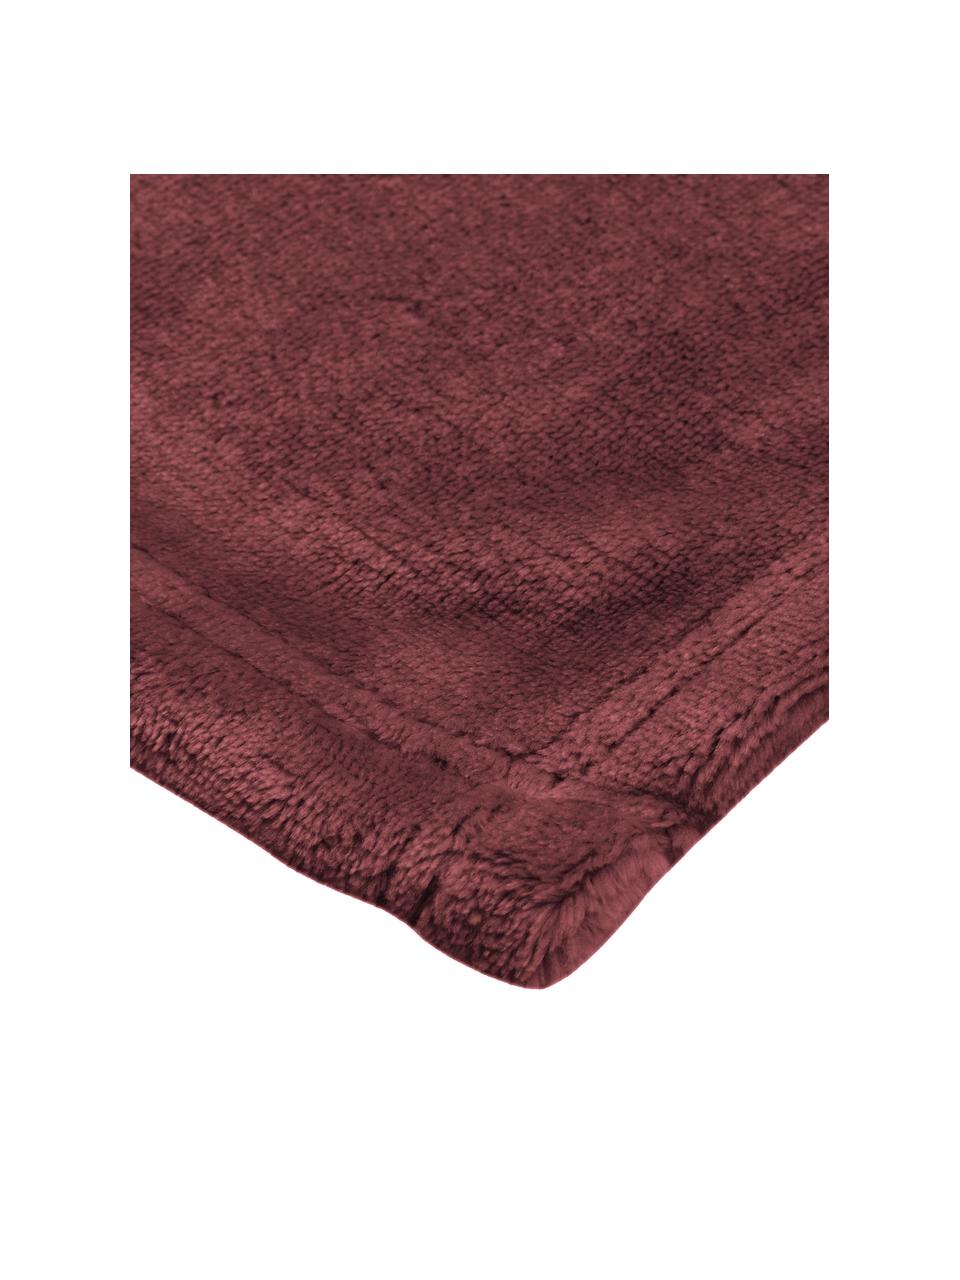 Coperta soffice color rosso vino Doudou, 100% poliestere, Rosso vino, Larg. 130 x Lung. 160 cm